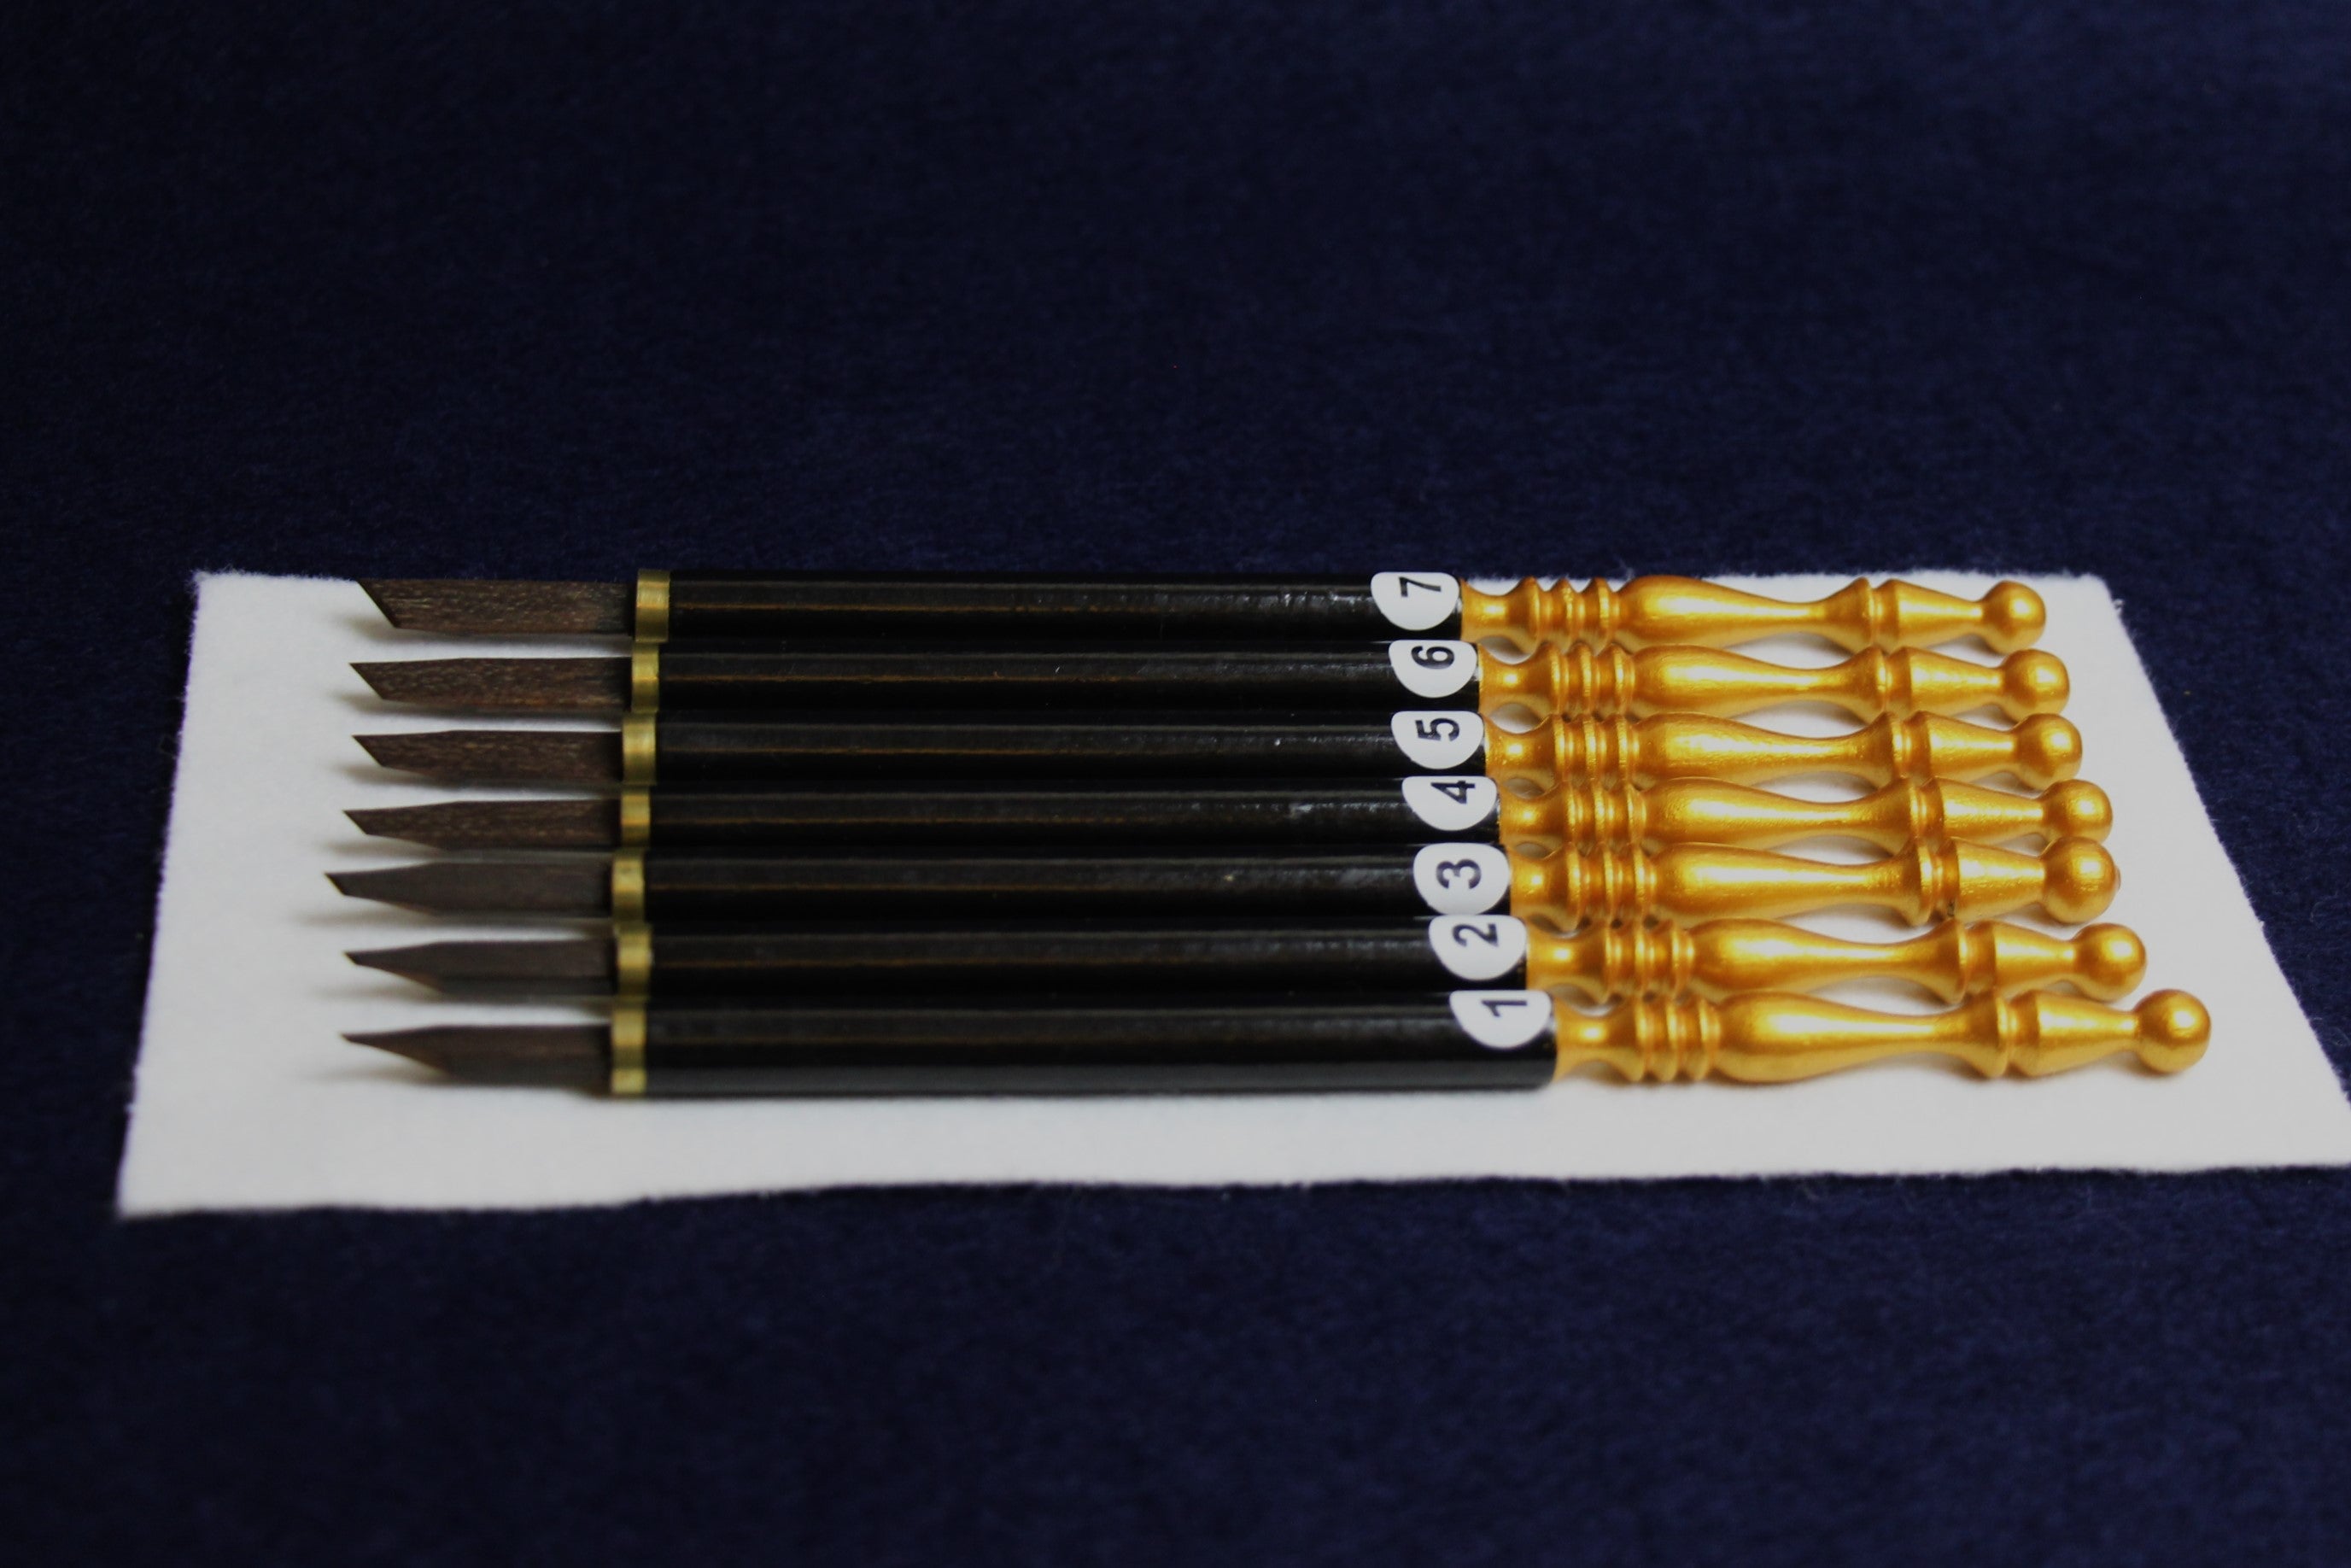 Set of 7 Javi qalam pens for Arabic calligraphy: 1 - 7 mm black and gold handle